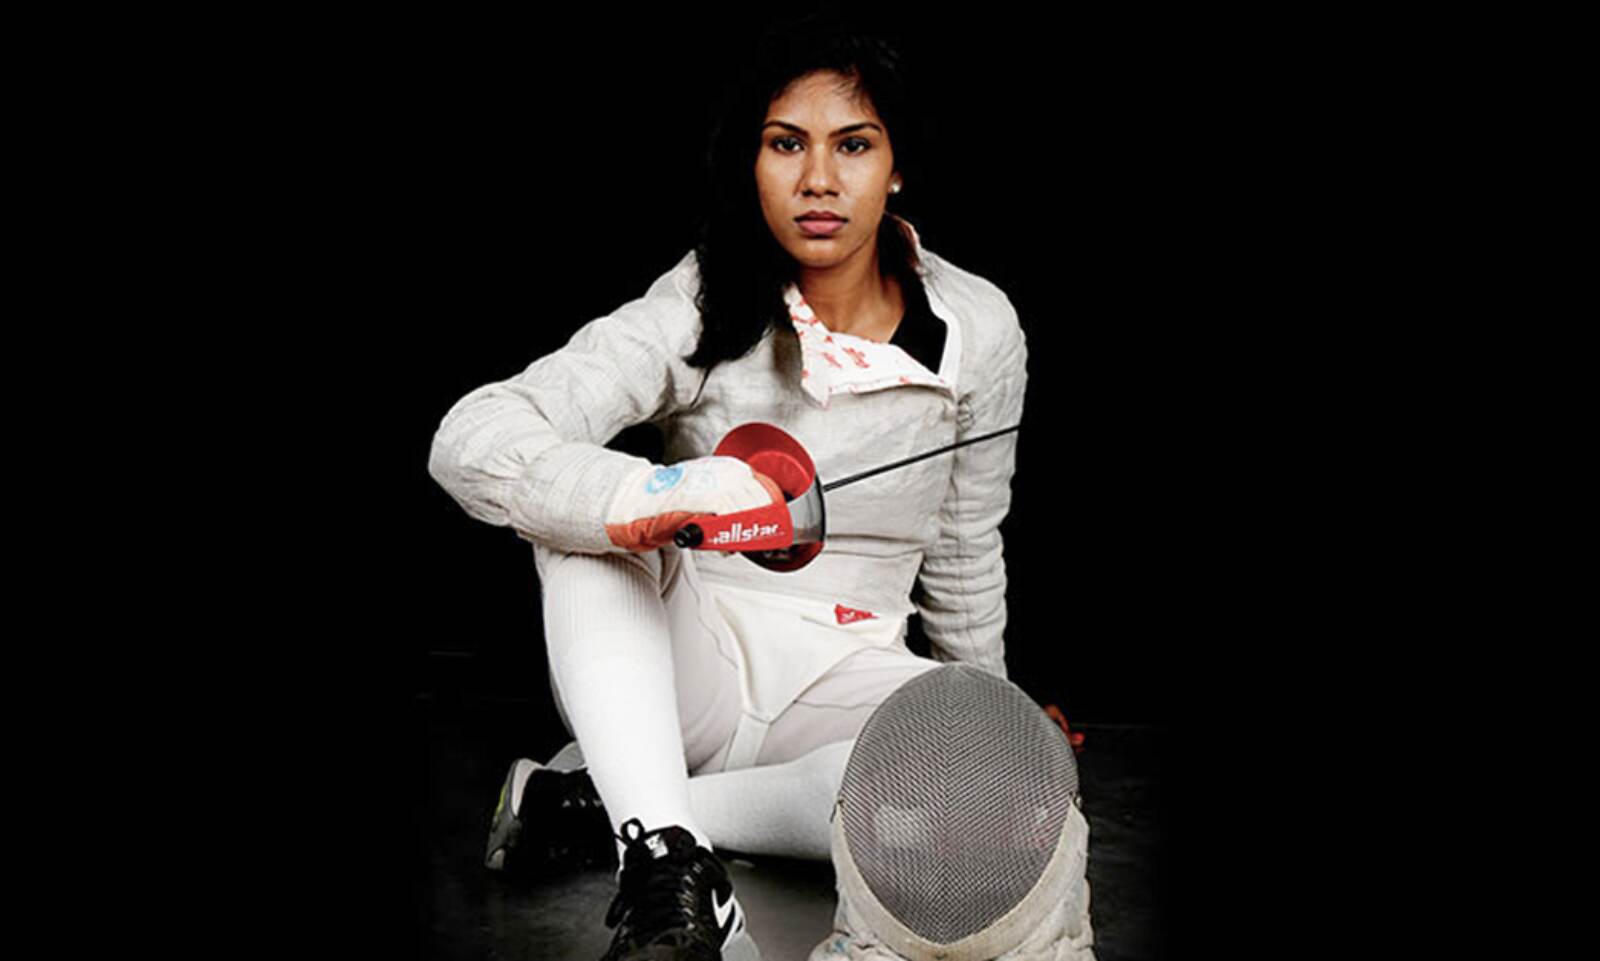 Why should we cherish Bhavani Devi&#39;s historic Olympics entry?